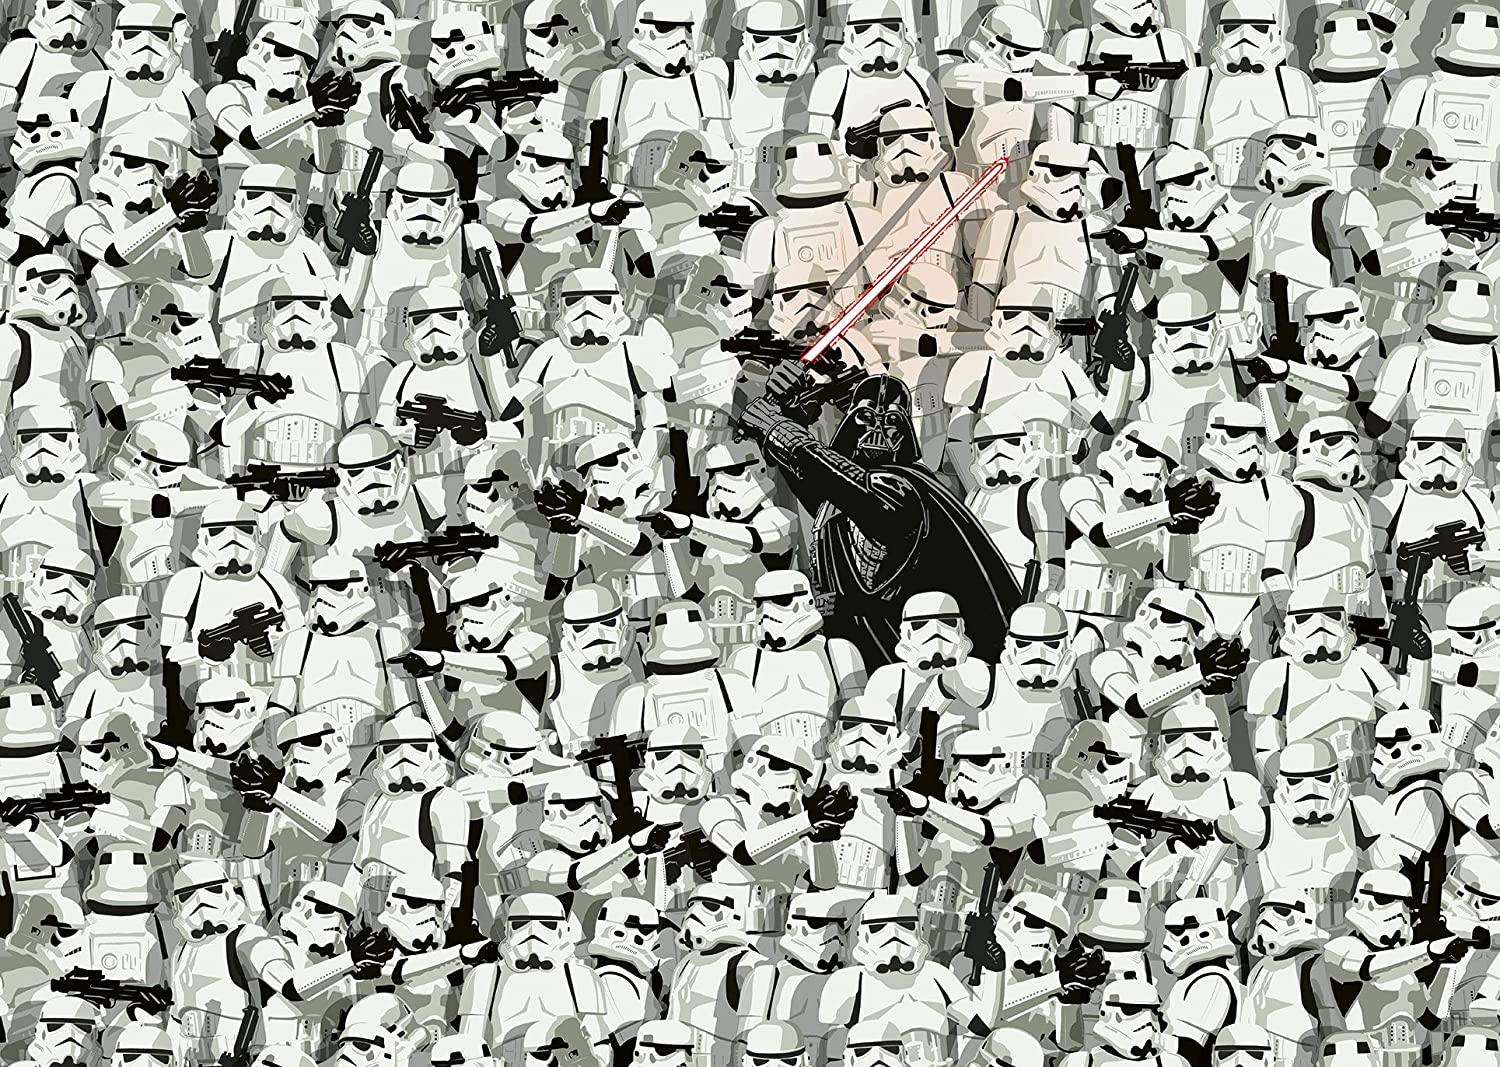 Star Wars: Darth Vader & Stormtrooper - Puzzle 1000 Teile